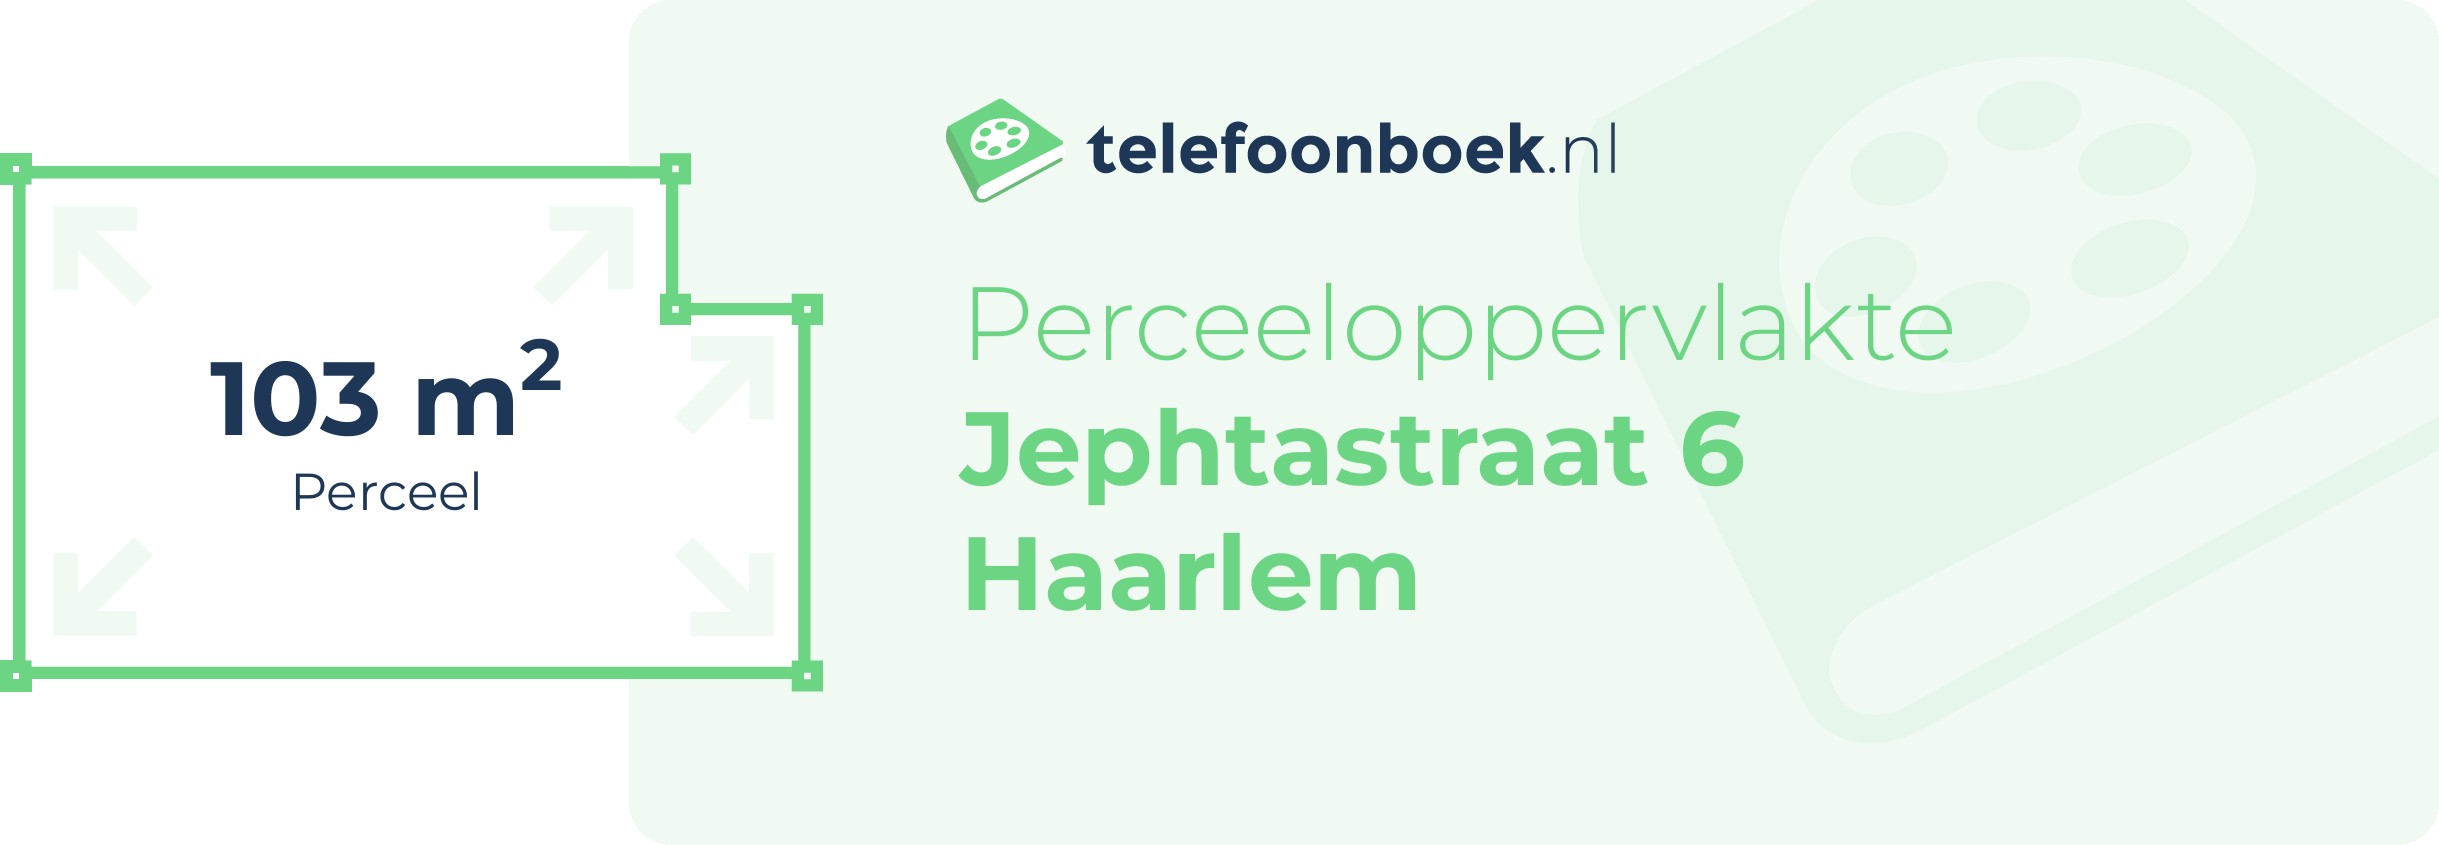 Perceeloppervlakte Jephtastraat 6 Haarlem